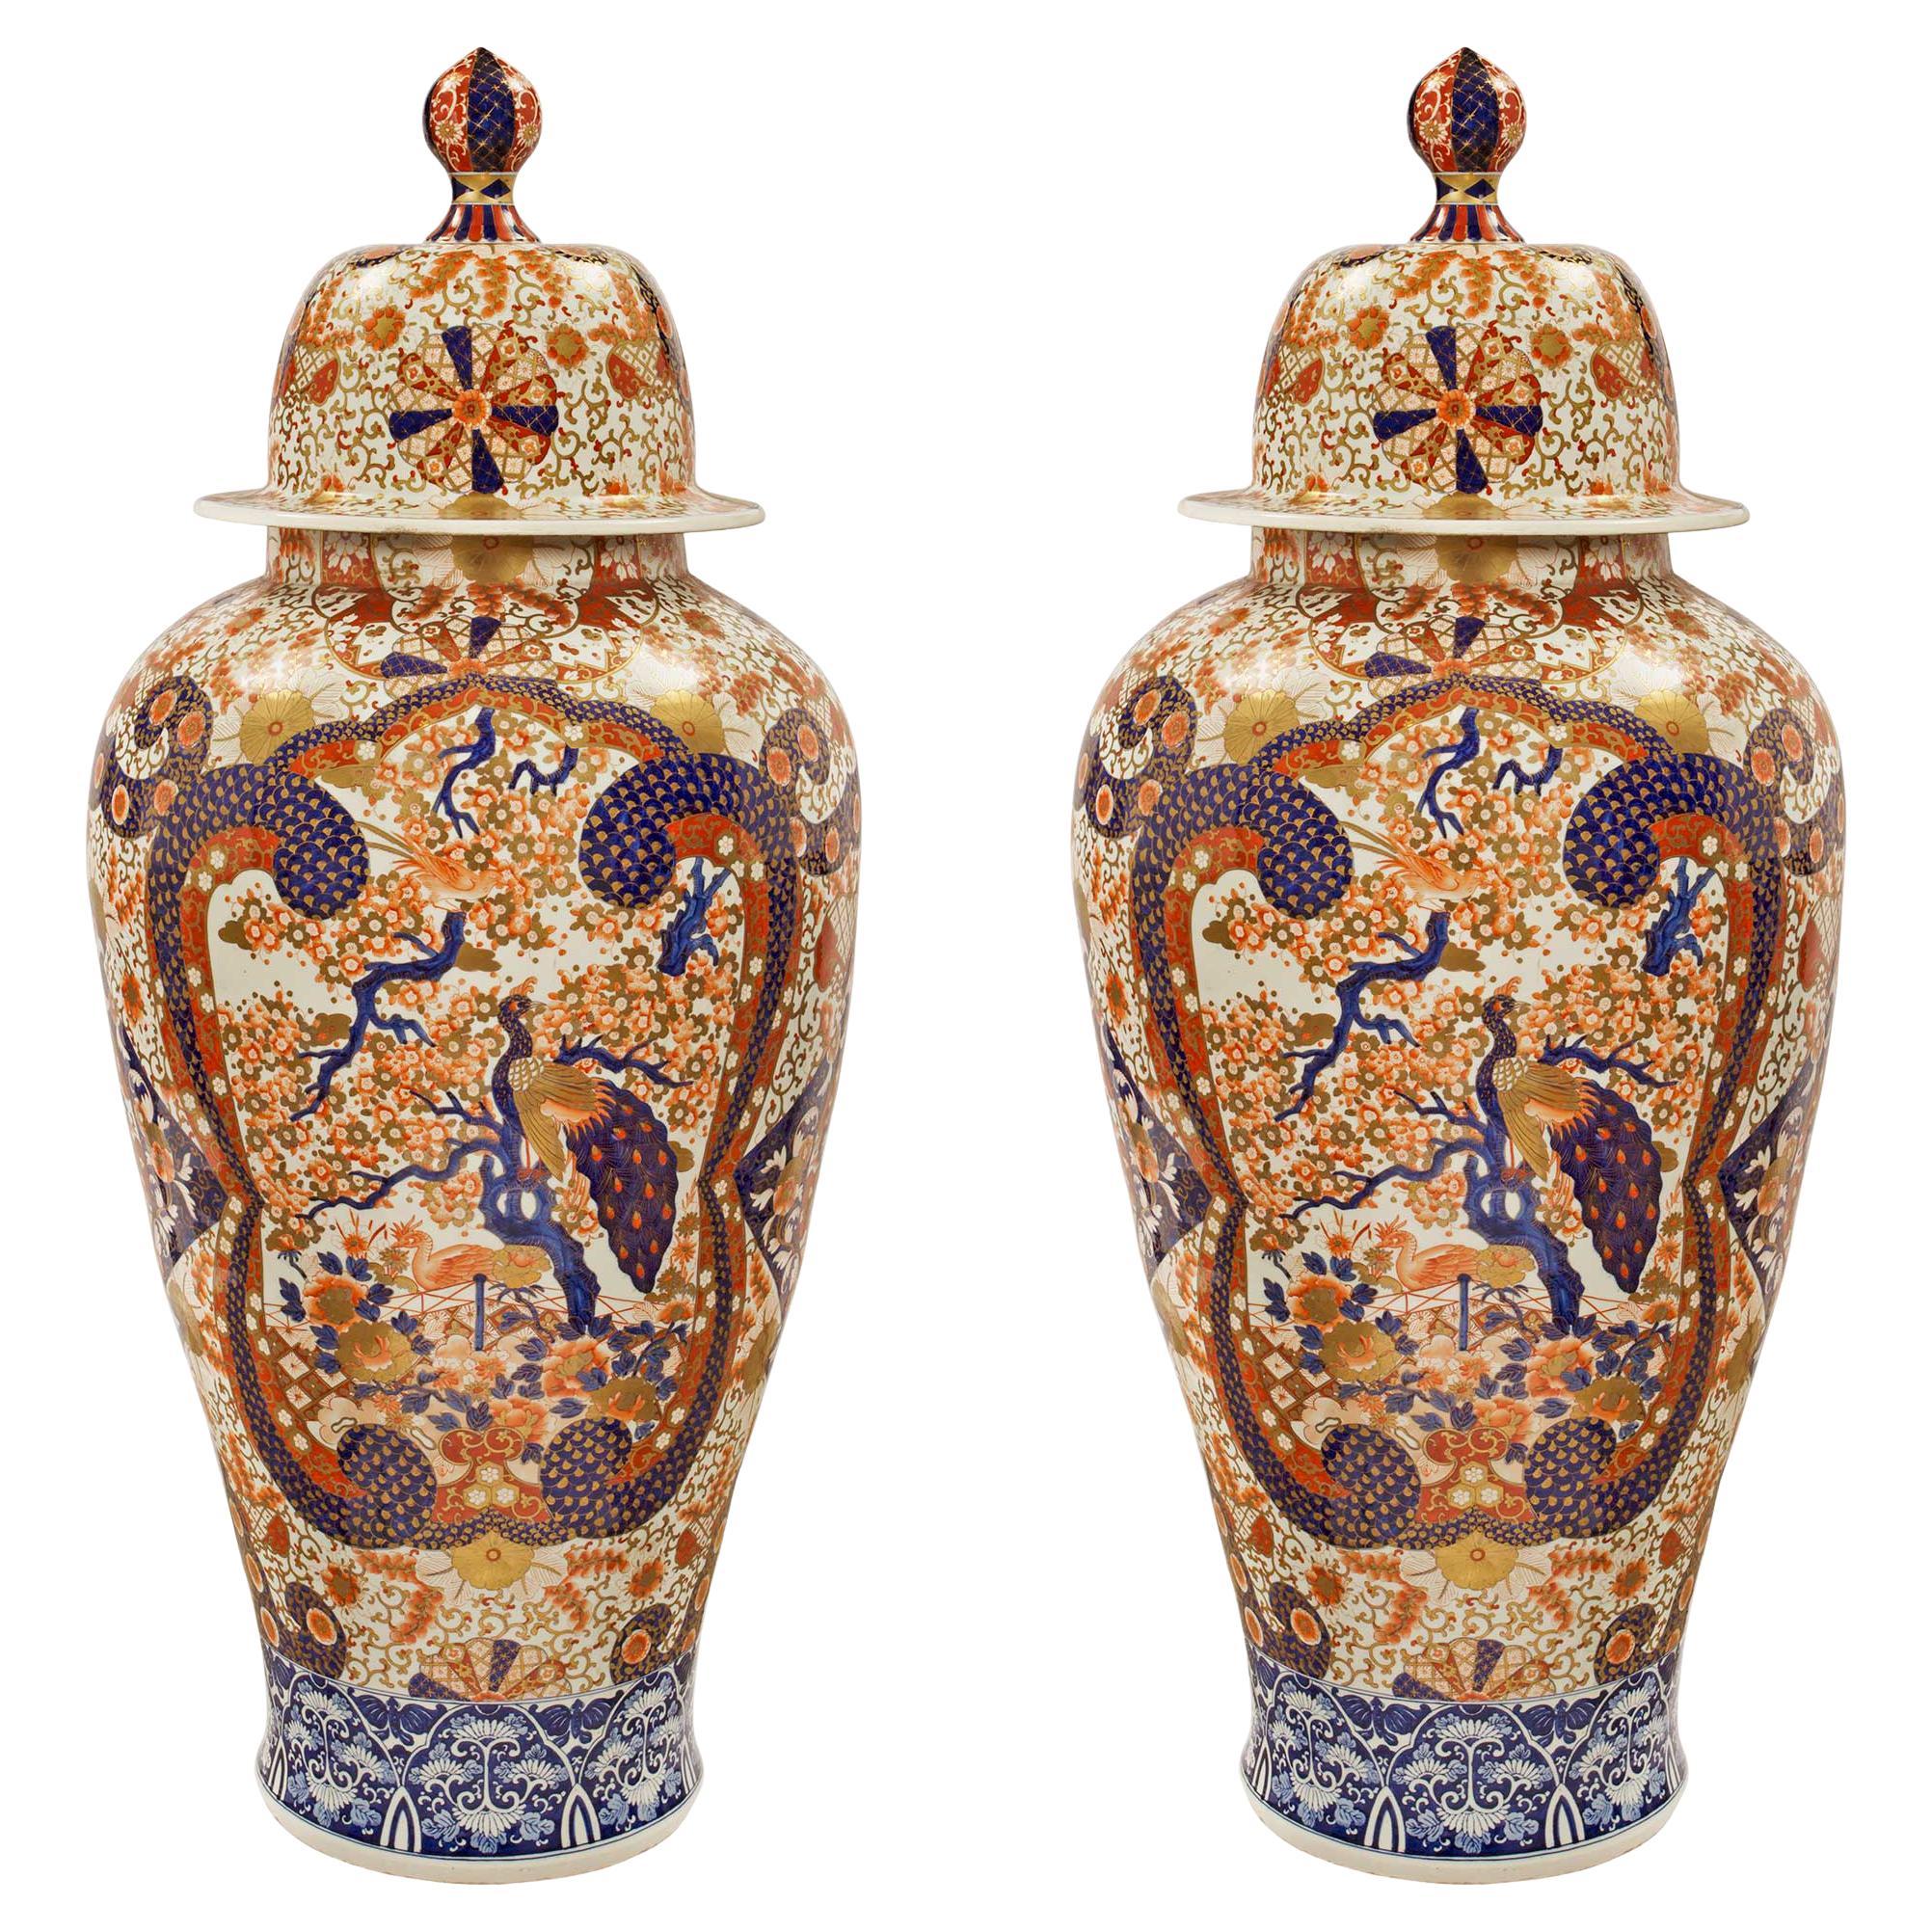 Pair of 19th Century Japanese Imari Porcelain Urns